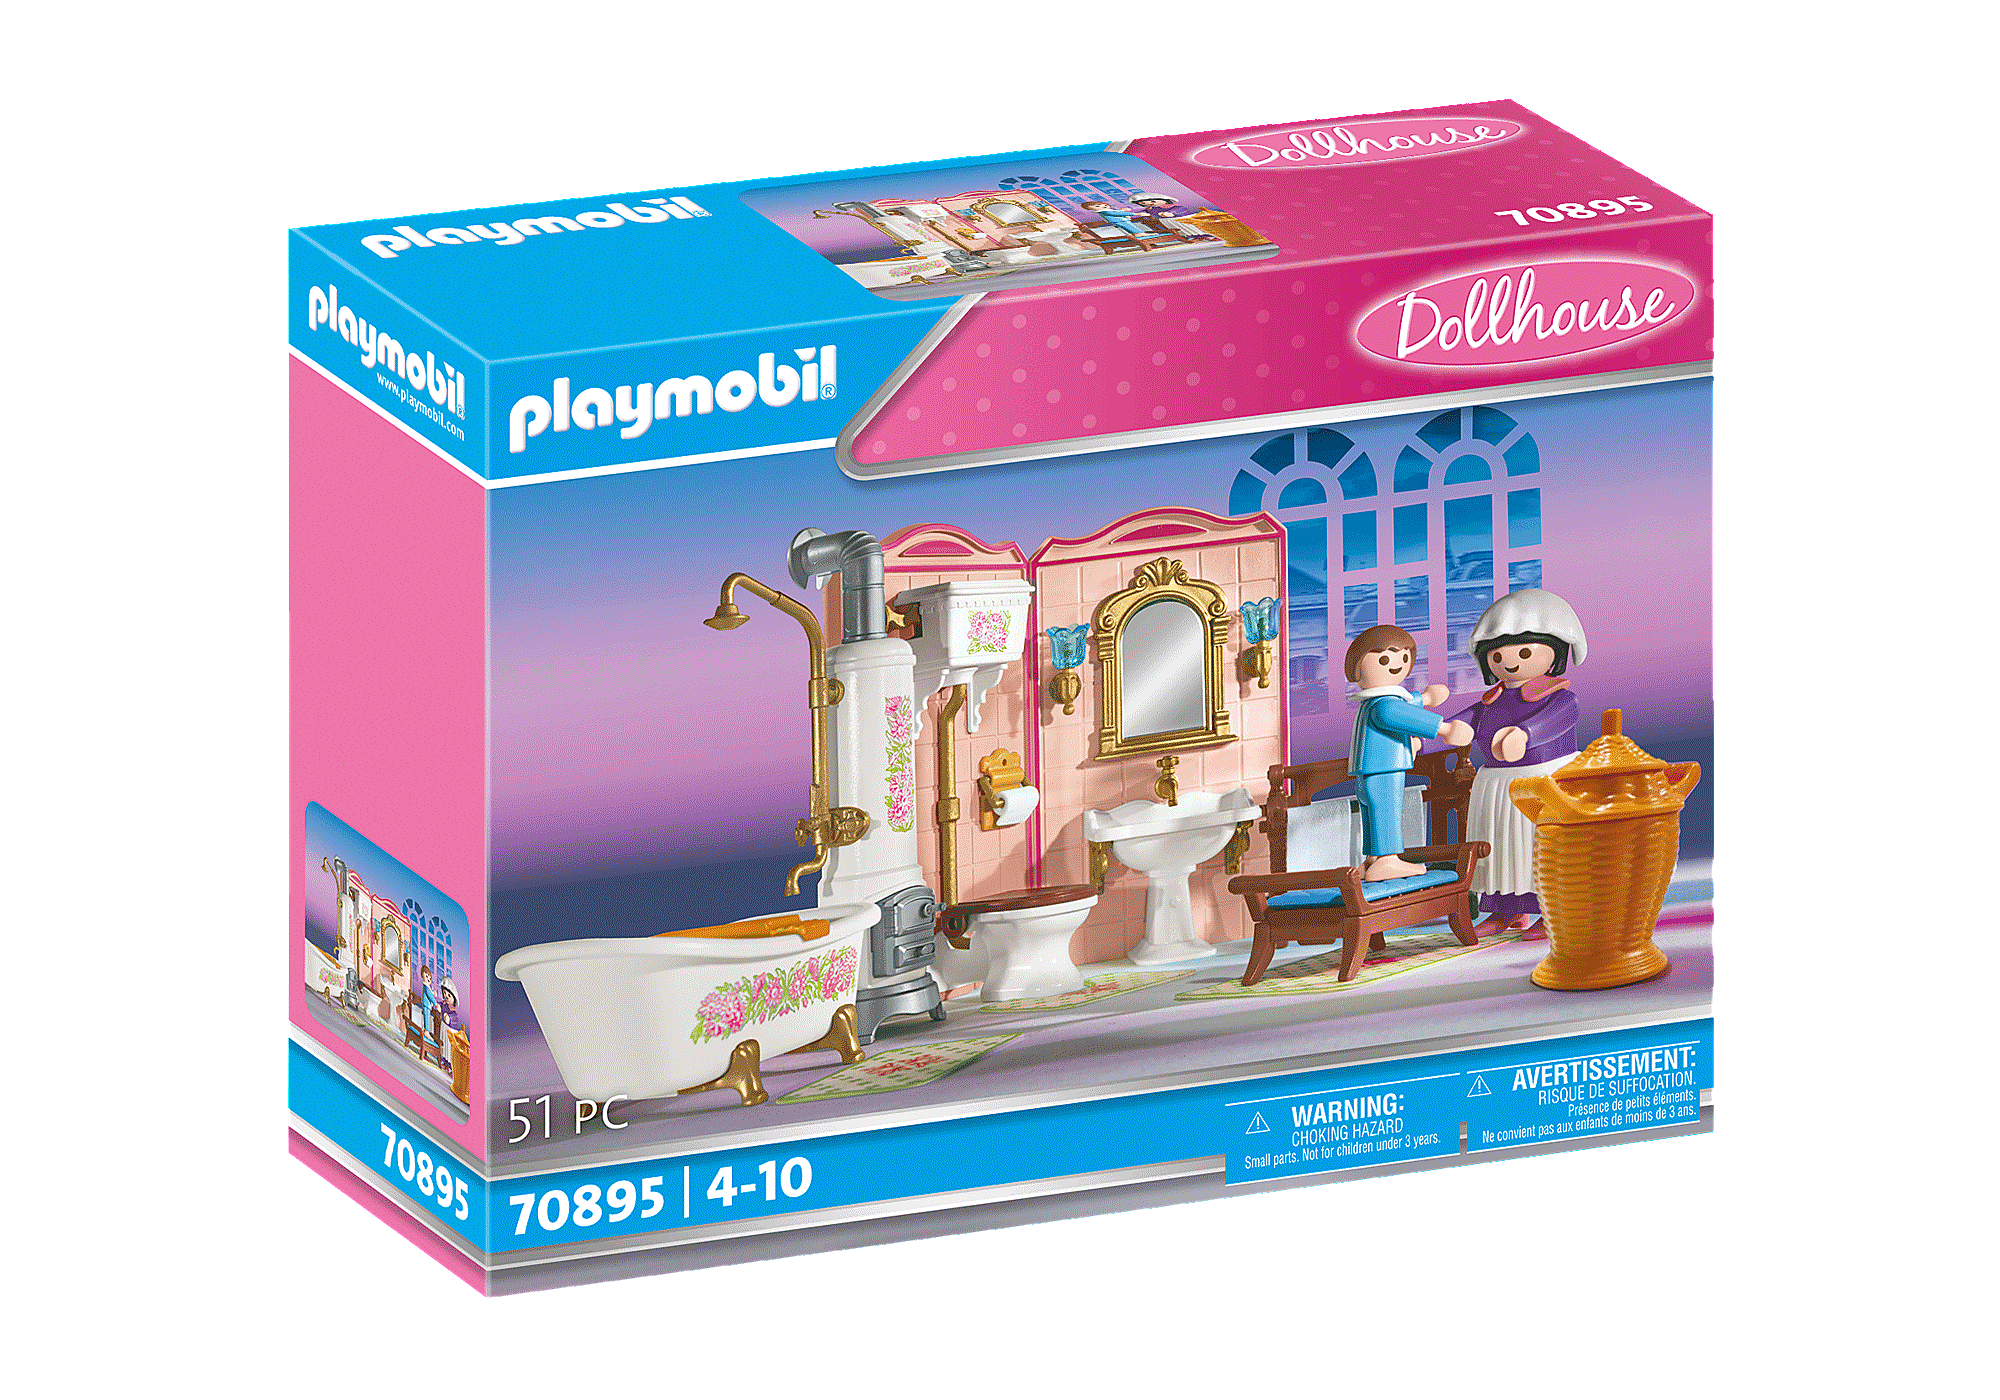 Playmobil Grand Bathroom, Playsets -  Canada  Playmobil salle de bain,  Playmobil, Playmobil dollhouse